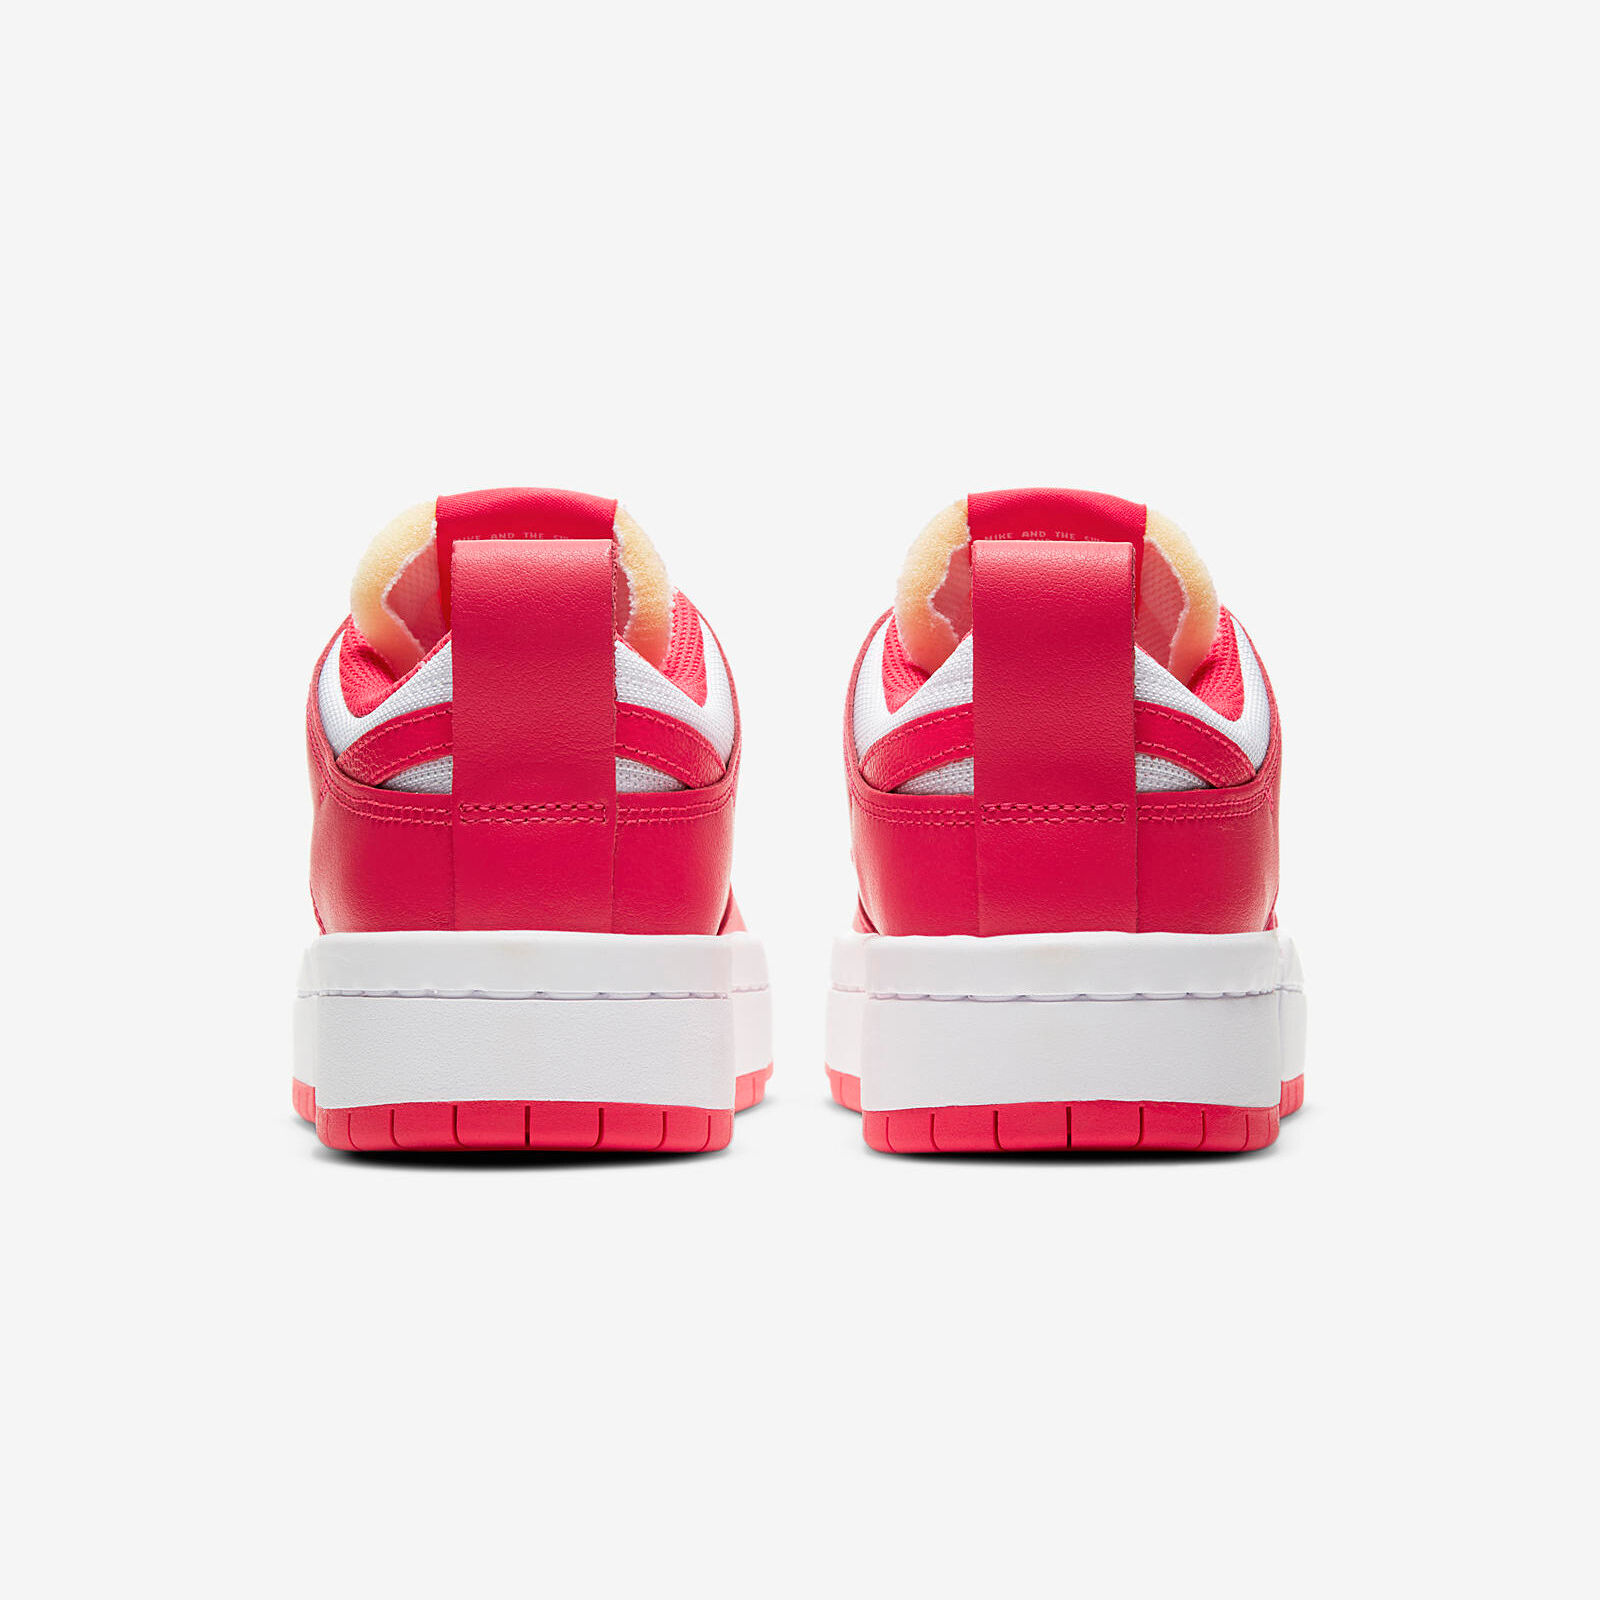 Nike Dunk Low Disrupt
« Siren Red »